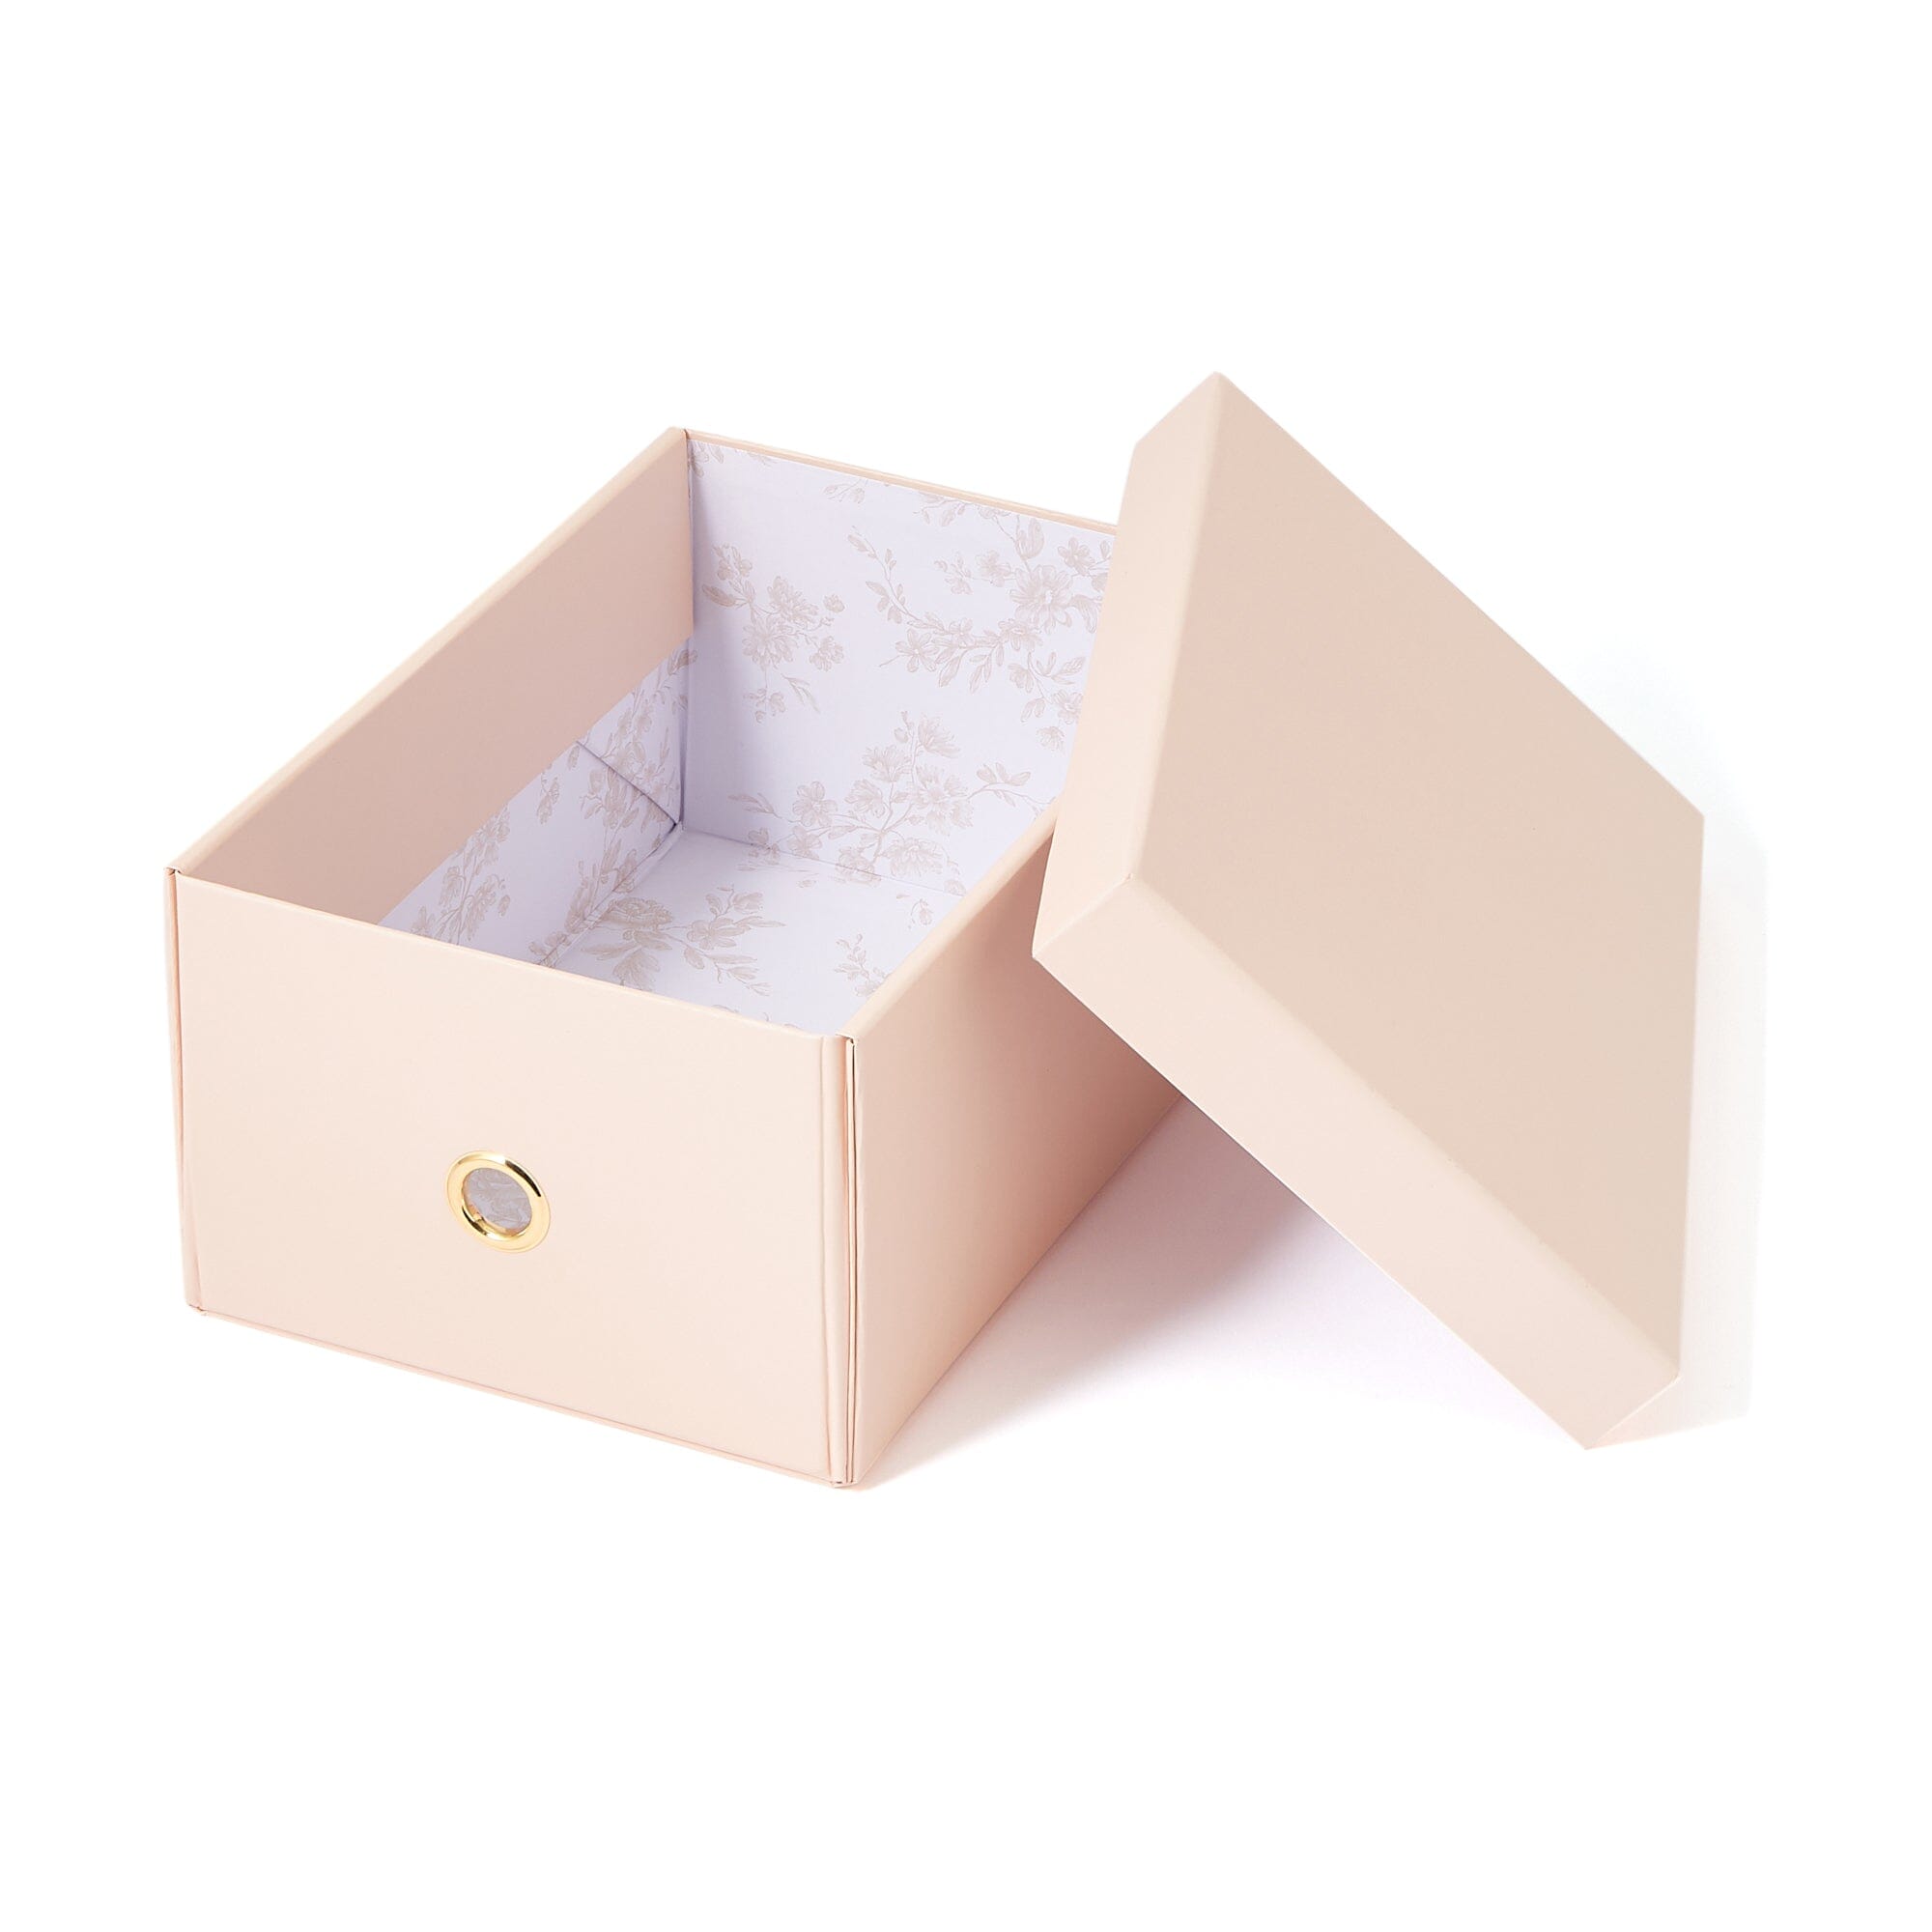 Petite Folding Box Small Beige